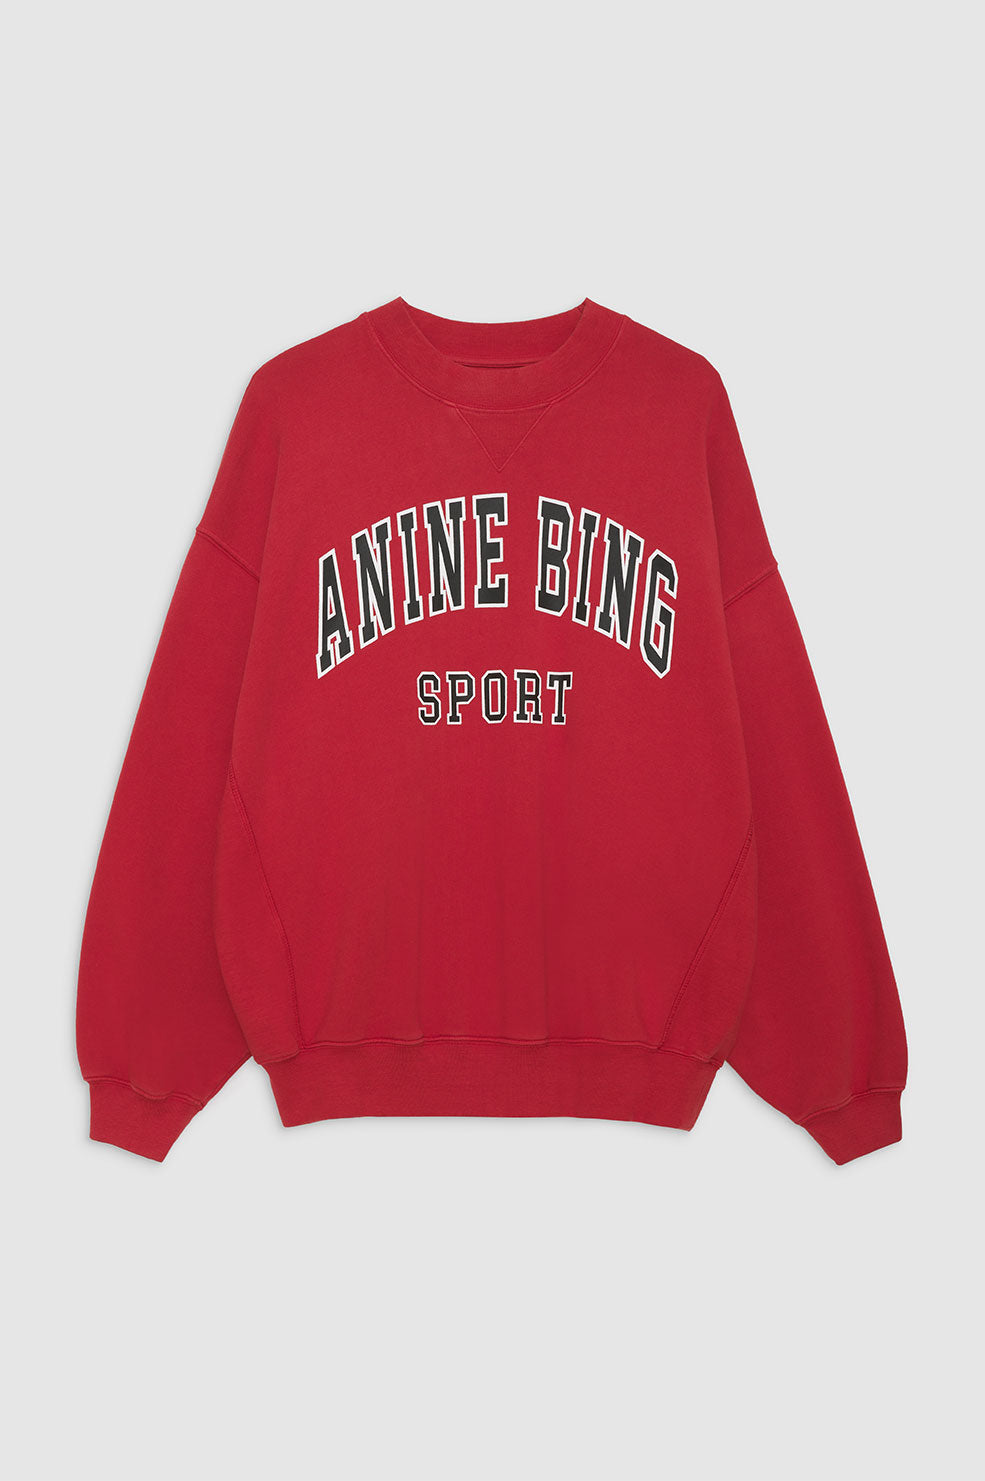 ANINE BING Jaci Sweatshirt Anine Bing - Red - Front View